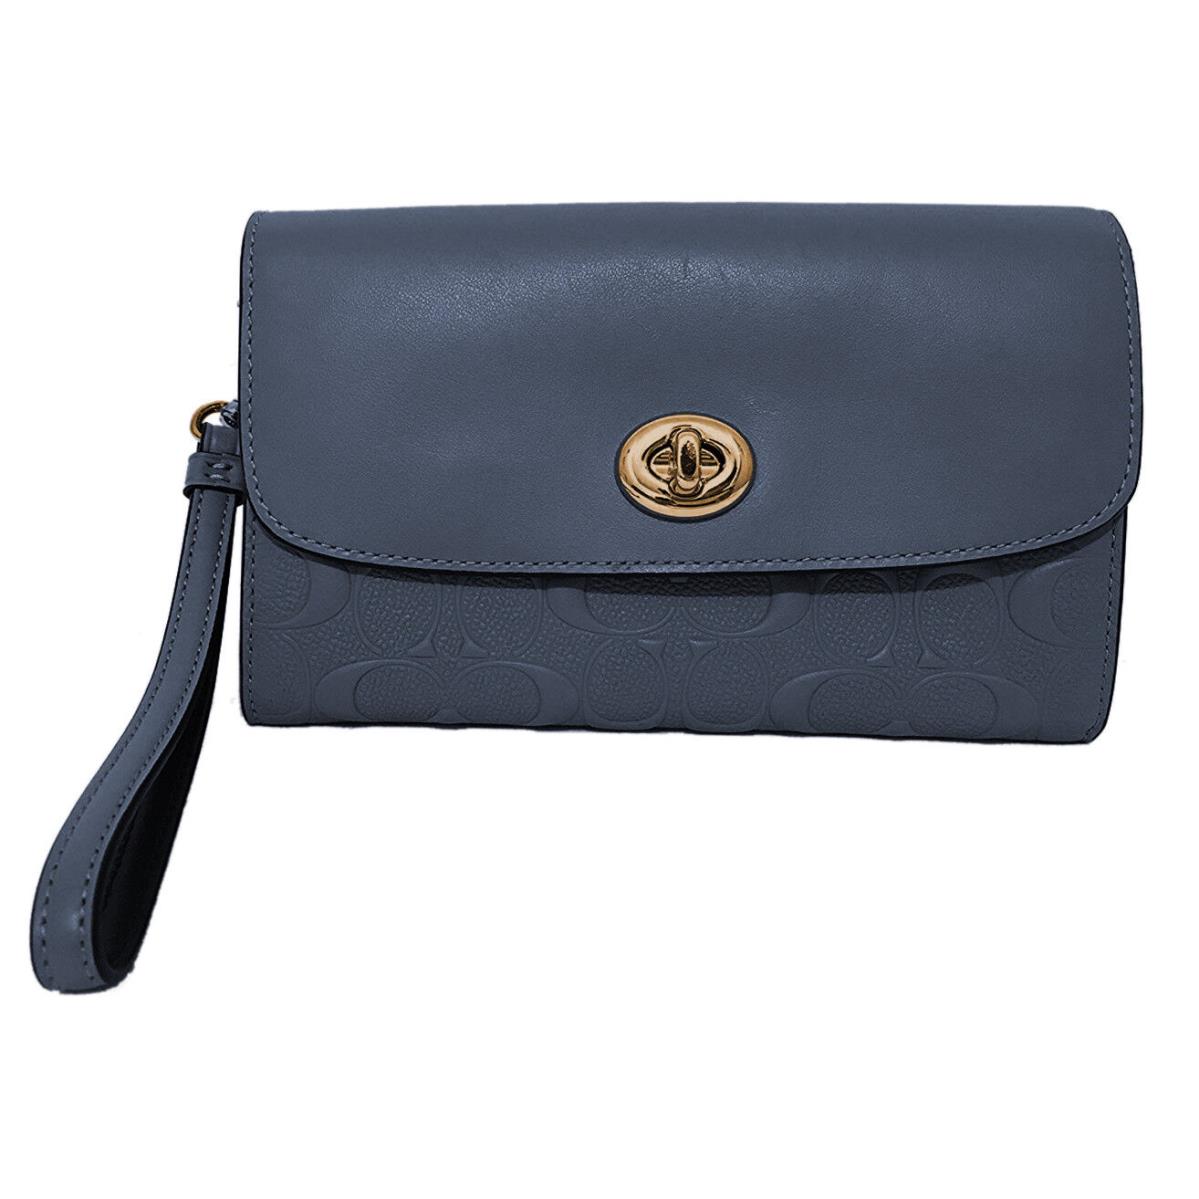 Coach Womens Midnight Blue Embossed Leather Crossbody Bag Purse F24469 8240-2